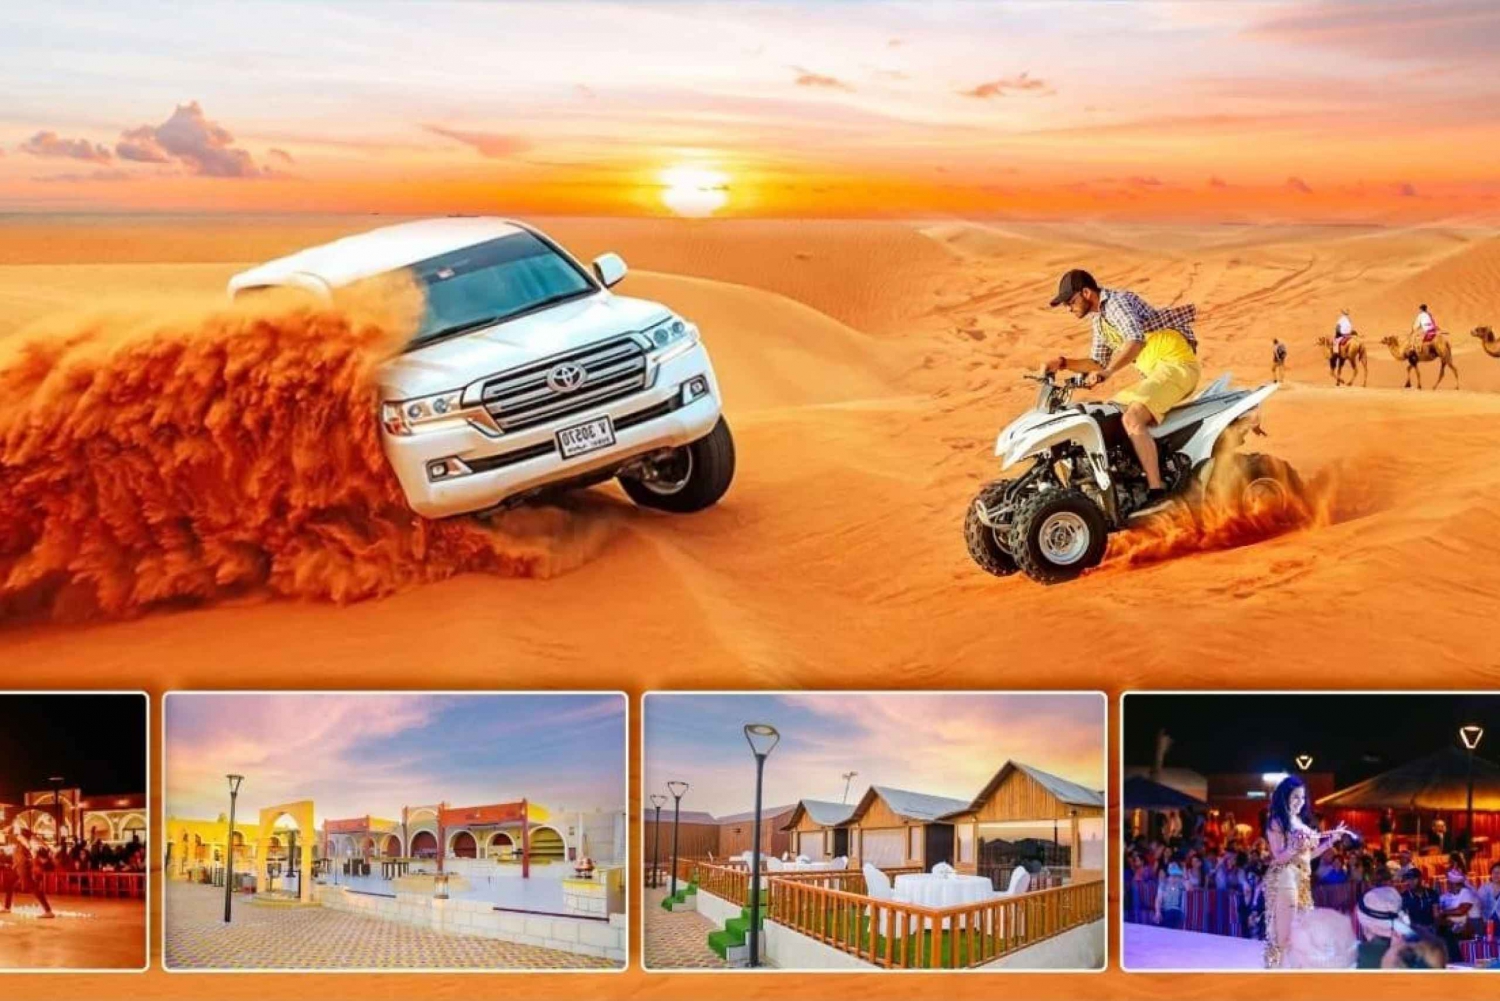 Ørkensafari om kvelden, firhjuling, sandboarding og kamelridning